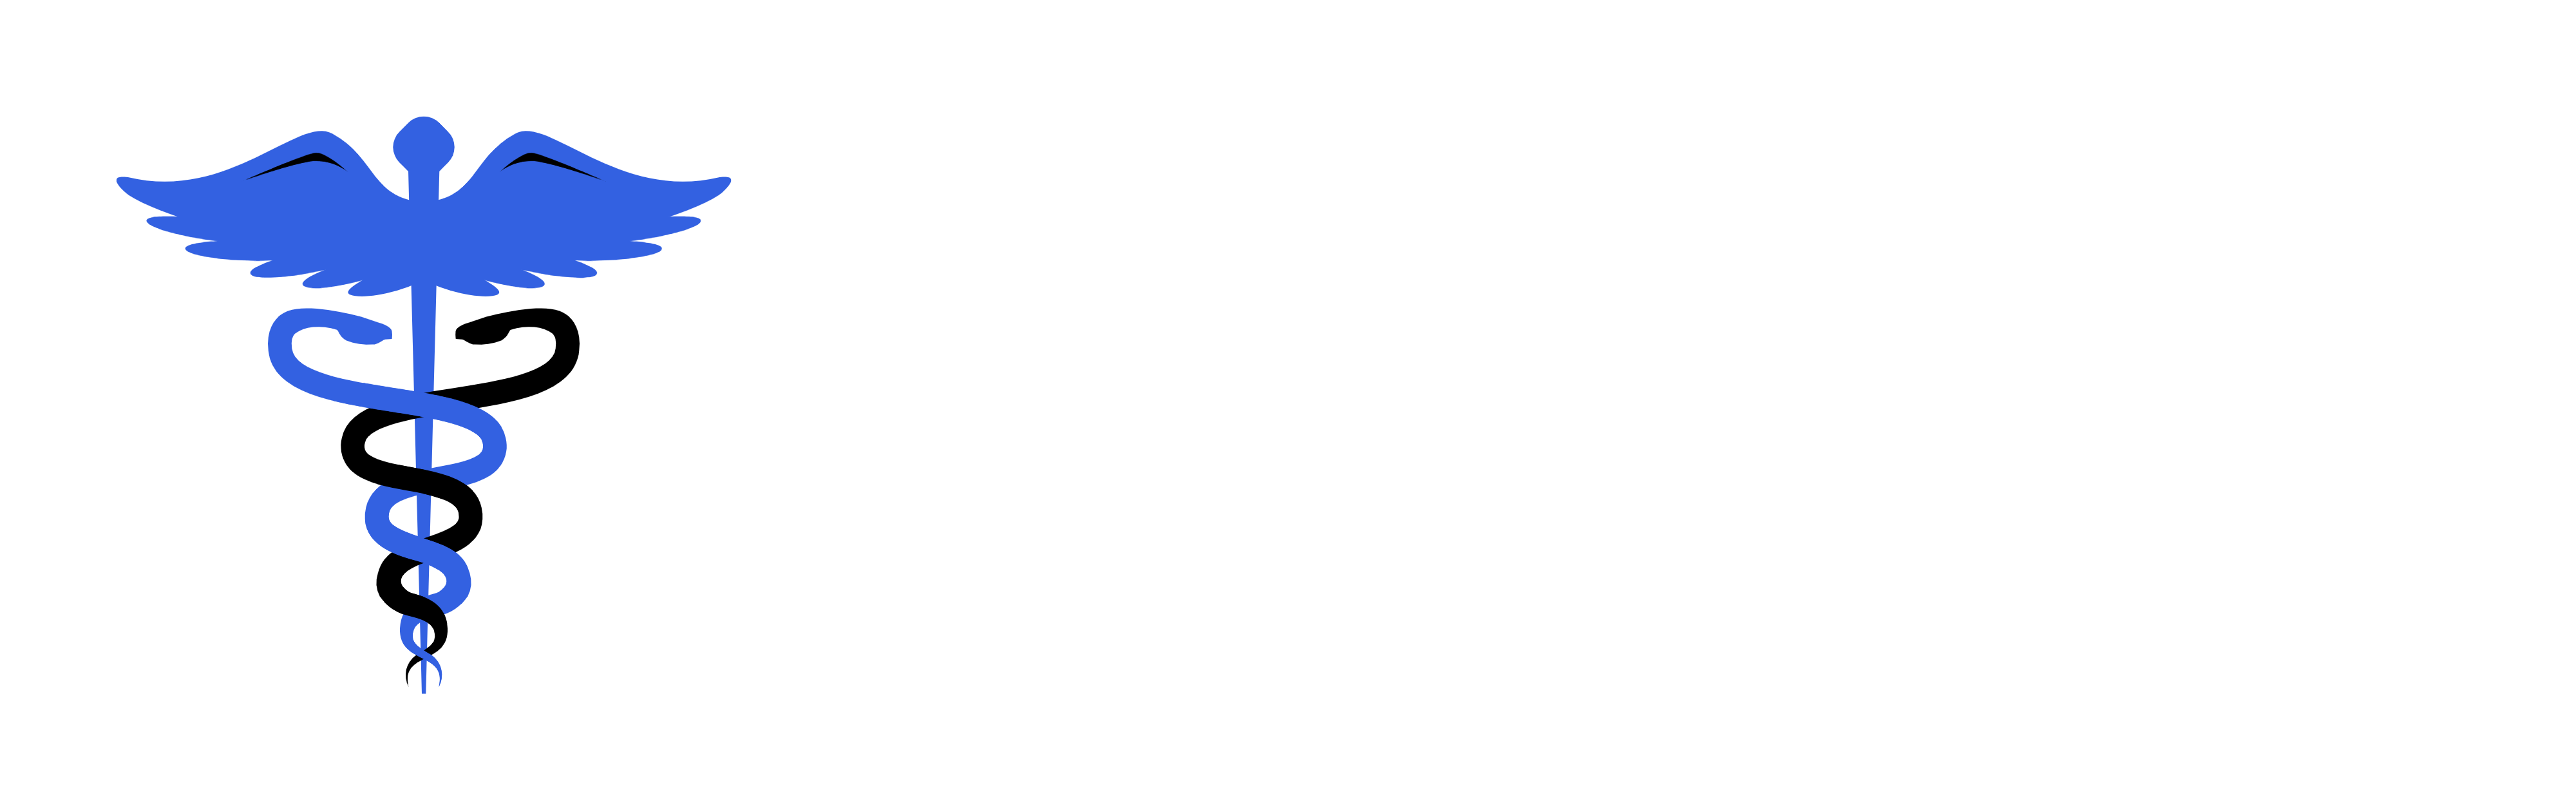 one stop psychiatric clinic